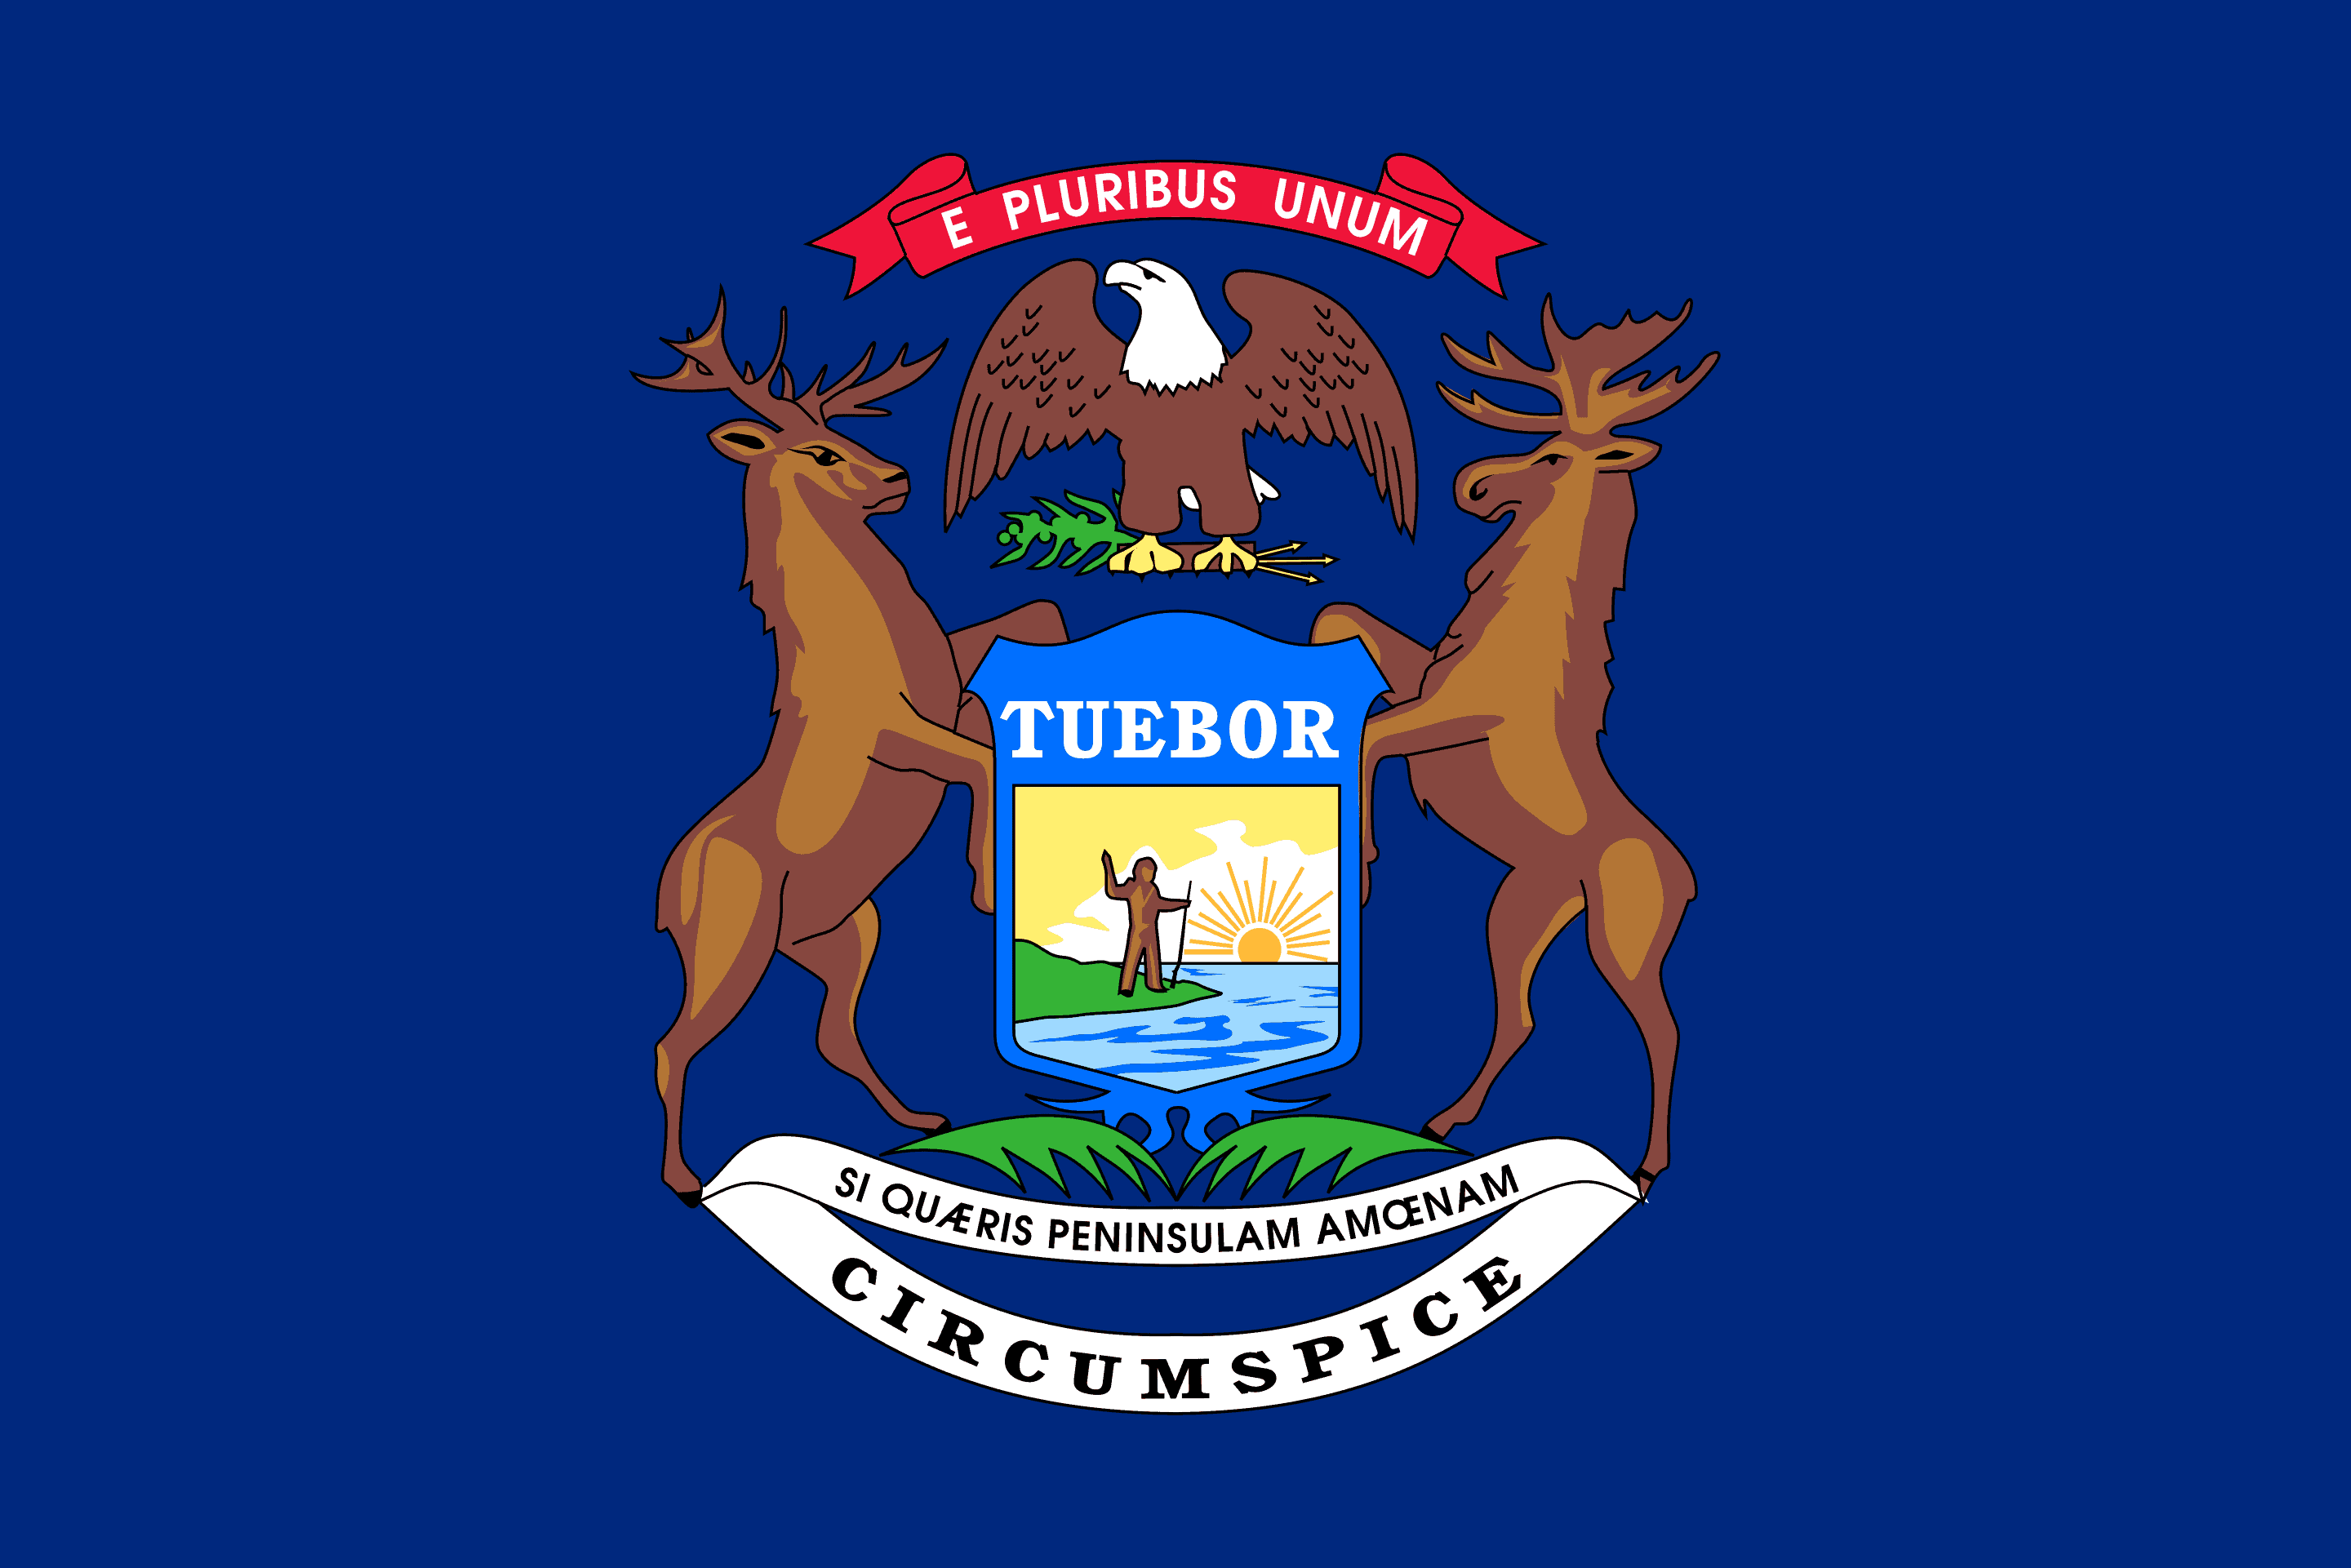 State of Michigan Flag - Michigan Drone Laws